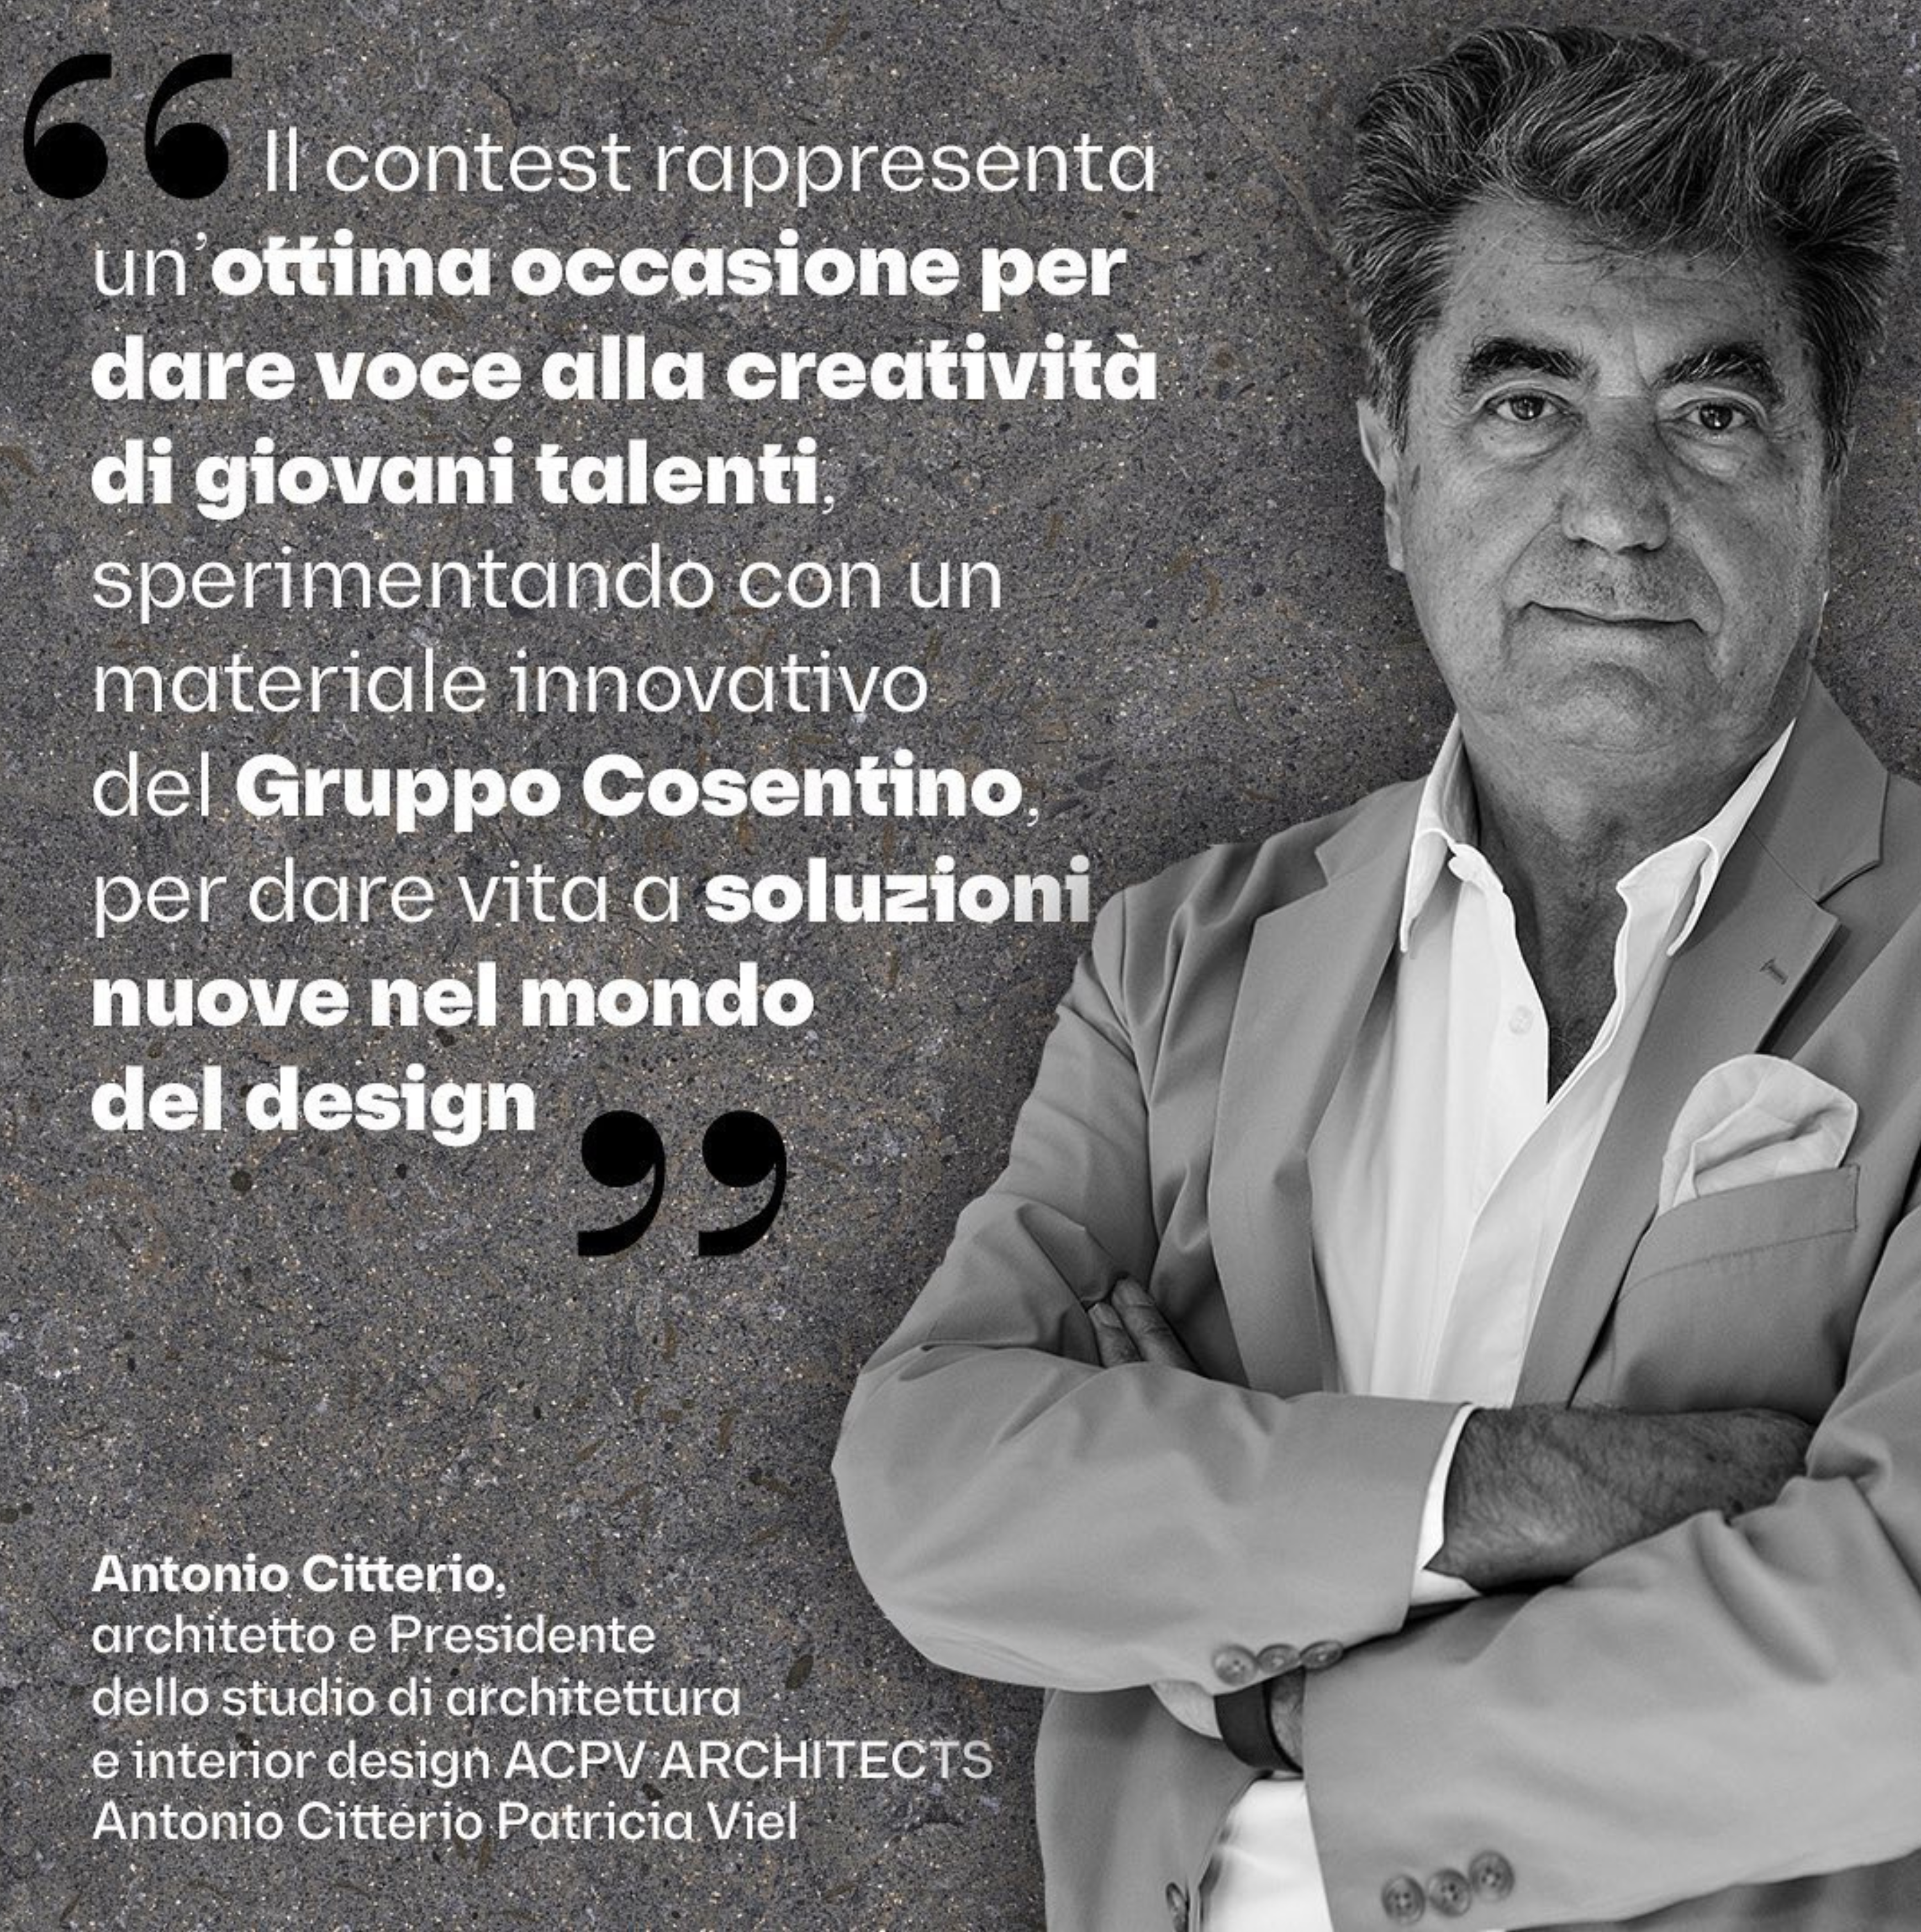 Antonio Citterio - Let's Design - Cosentino Contest 2023